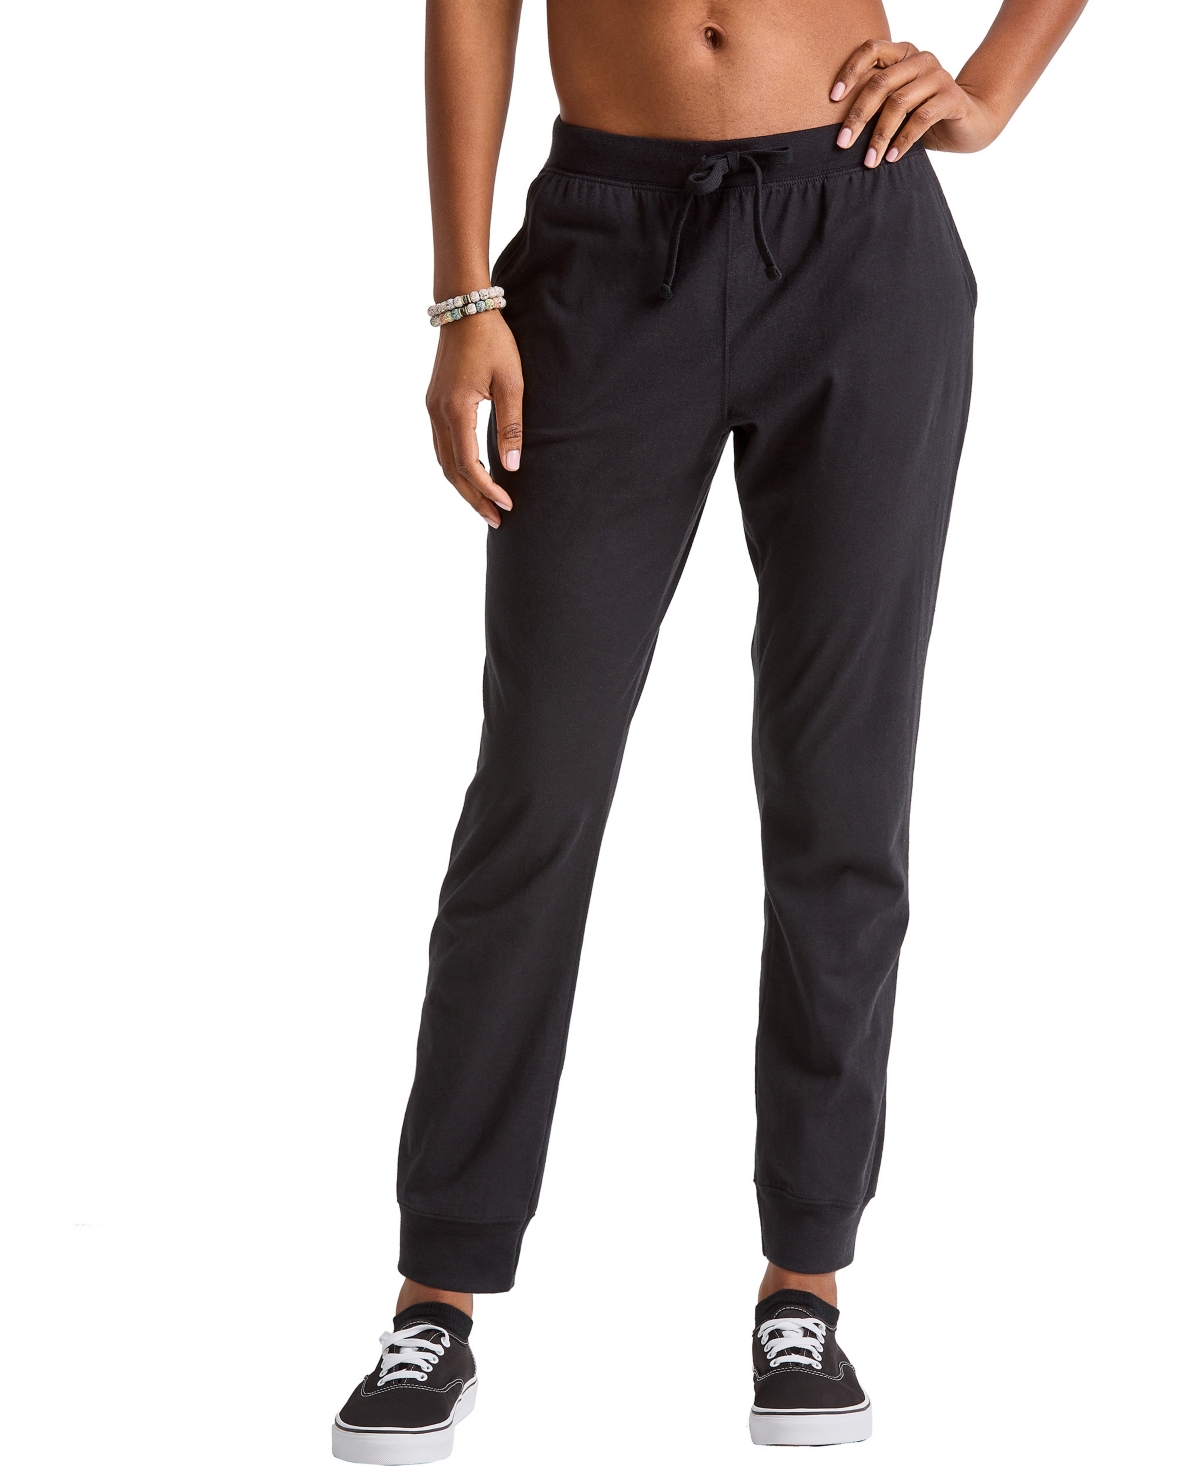 Hanes Women's Originals Cotton Jersey Jogger Pants In Black